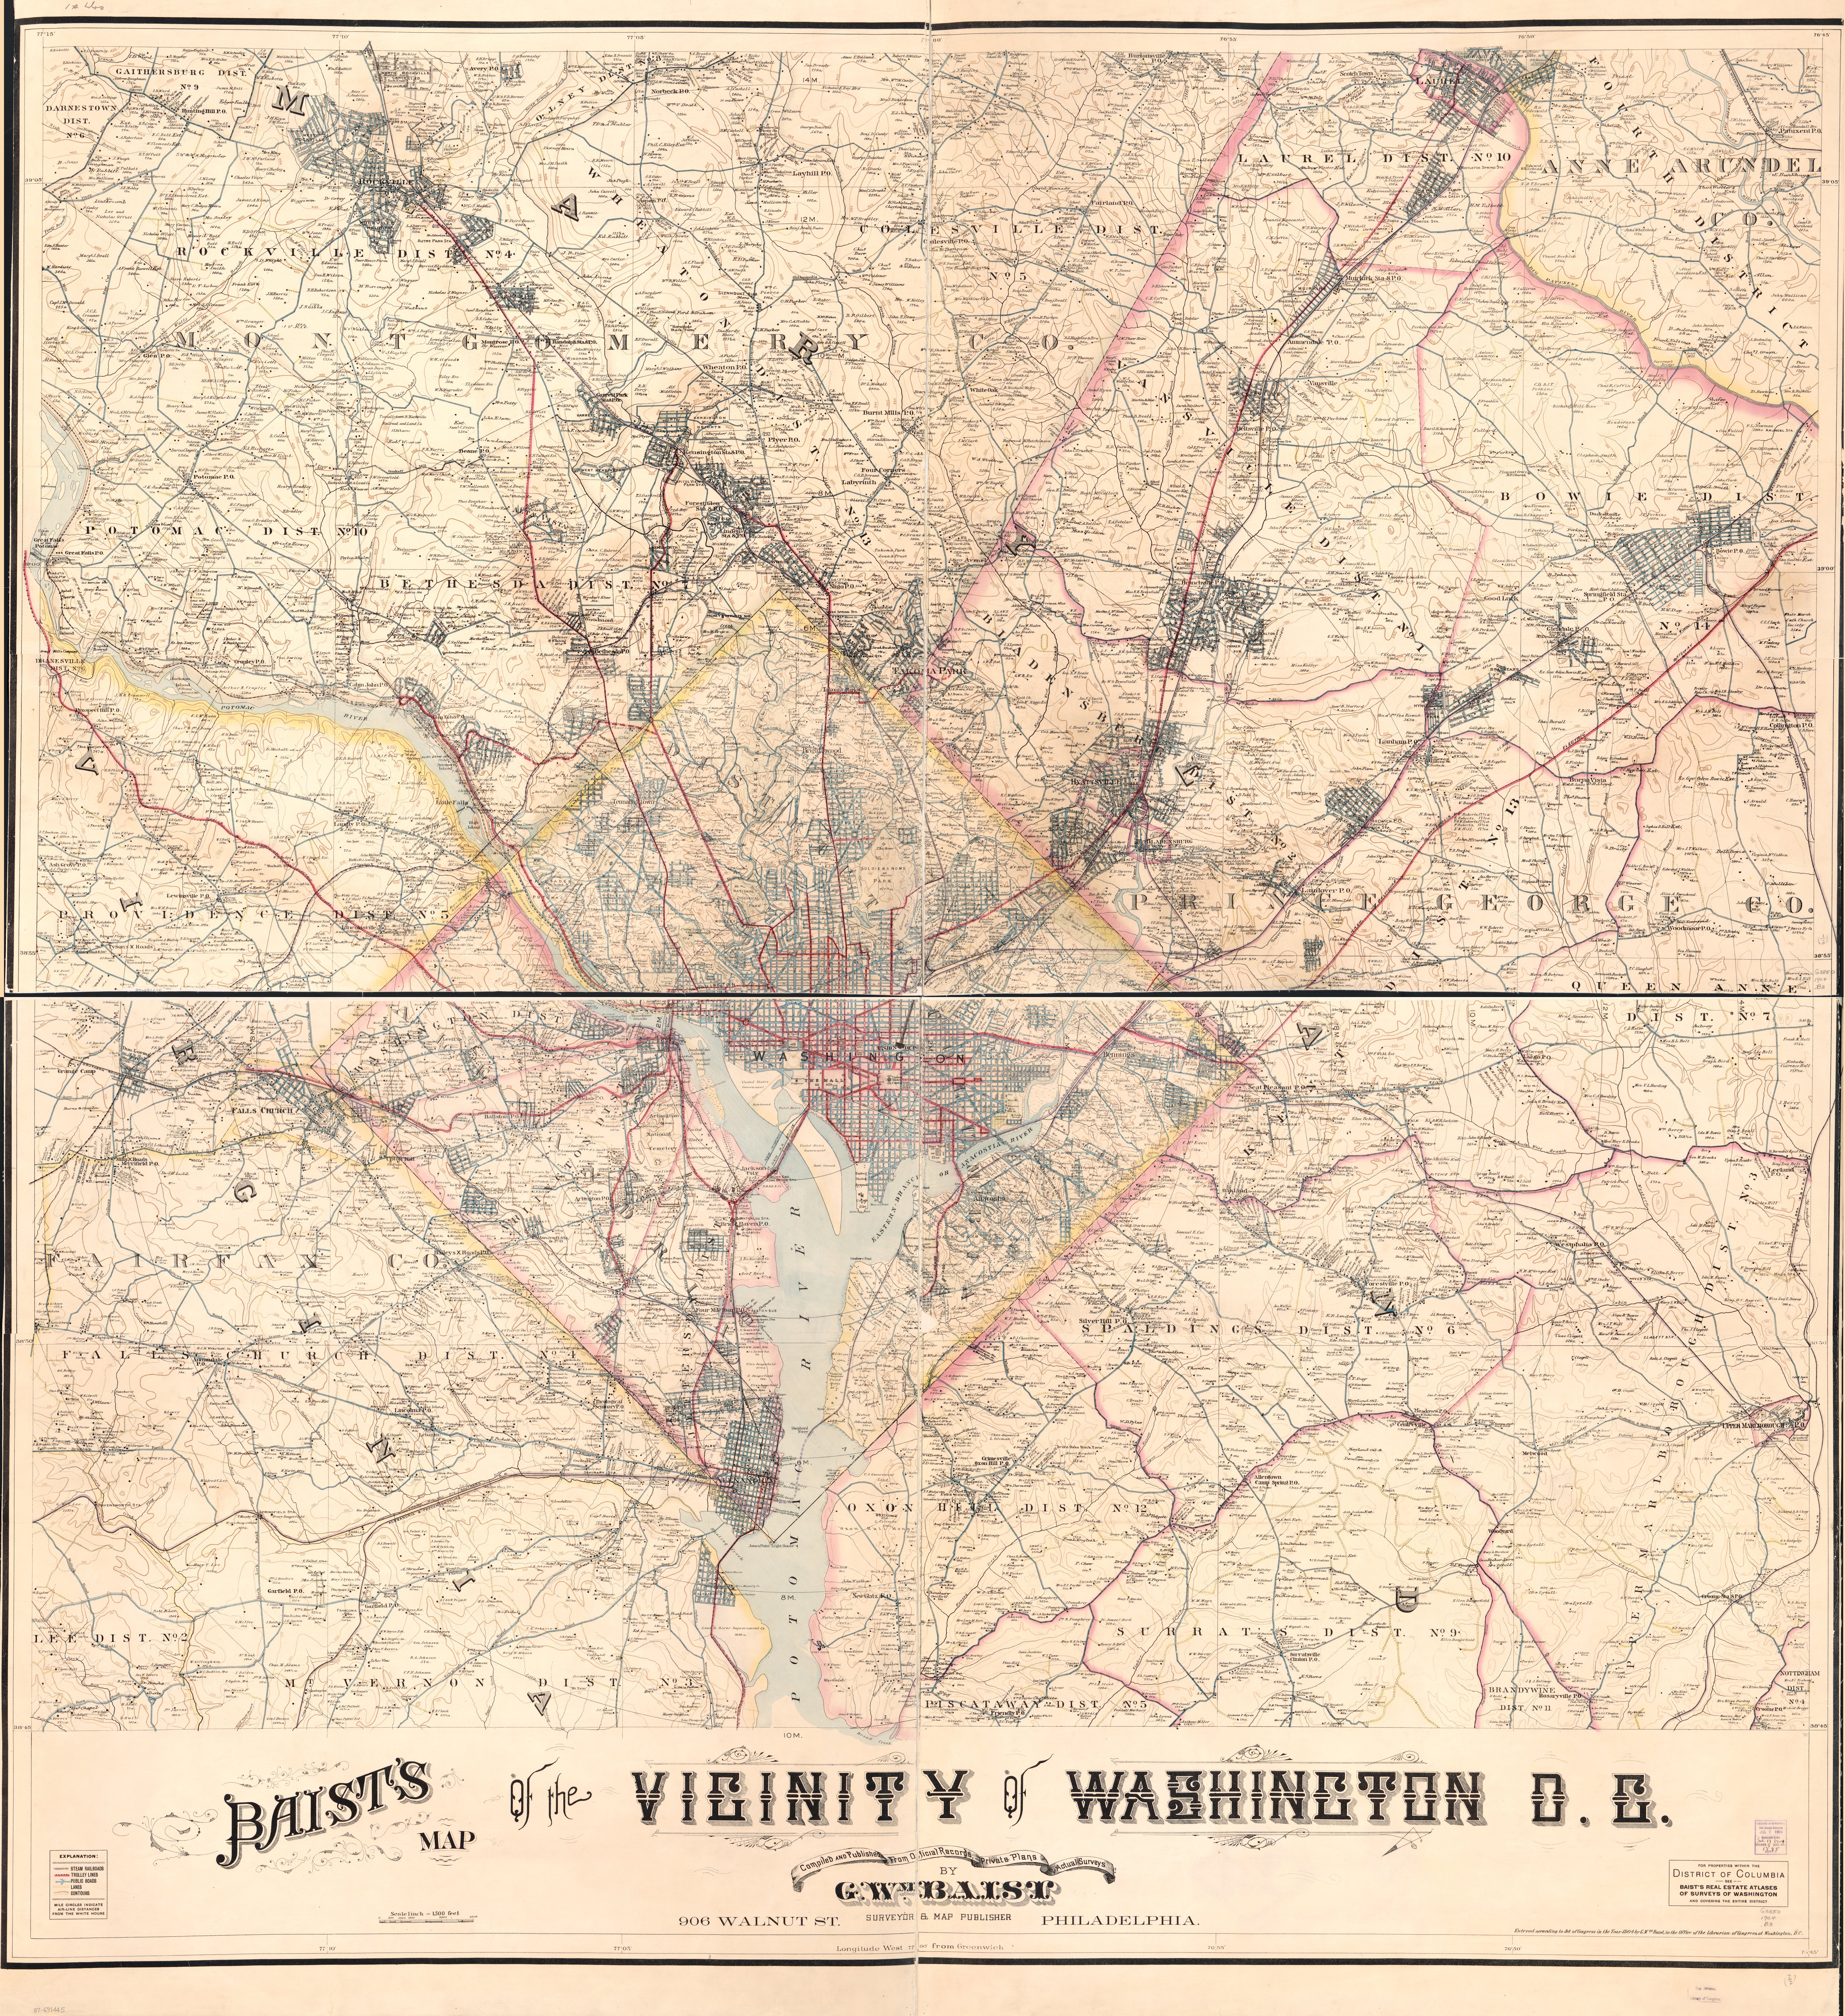 1904 Baist map of Washington, D.C.